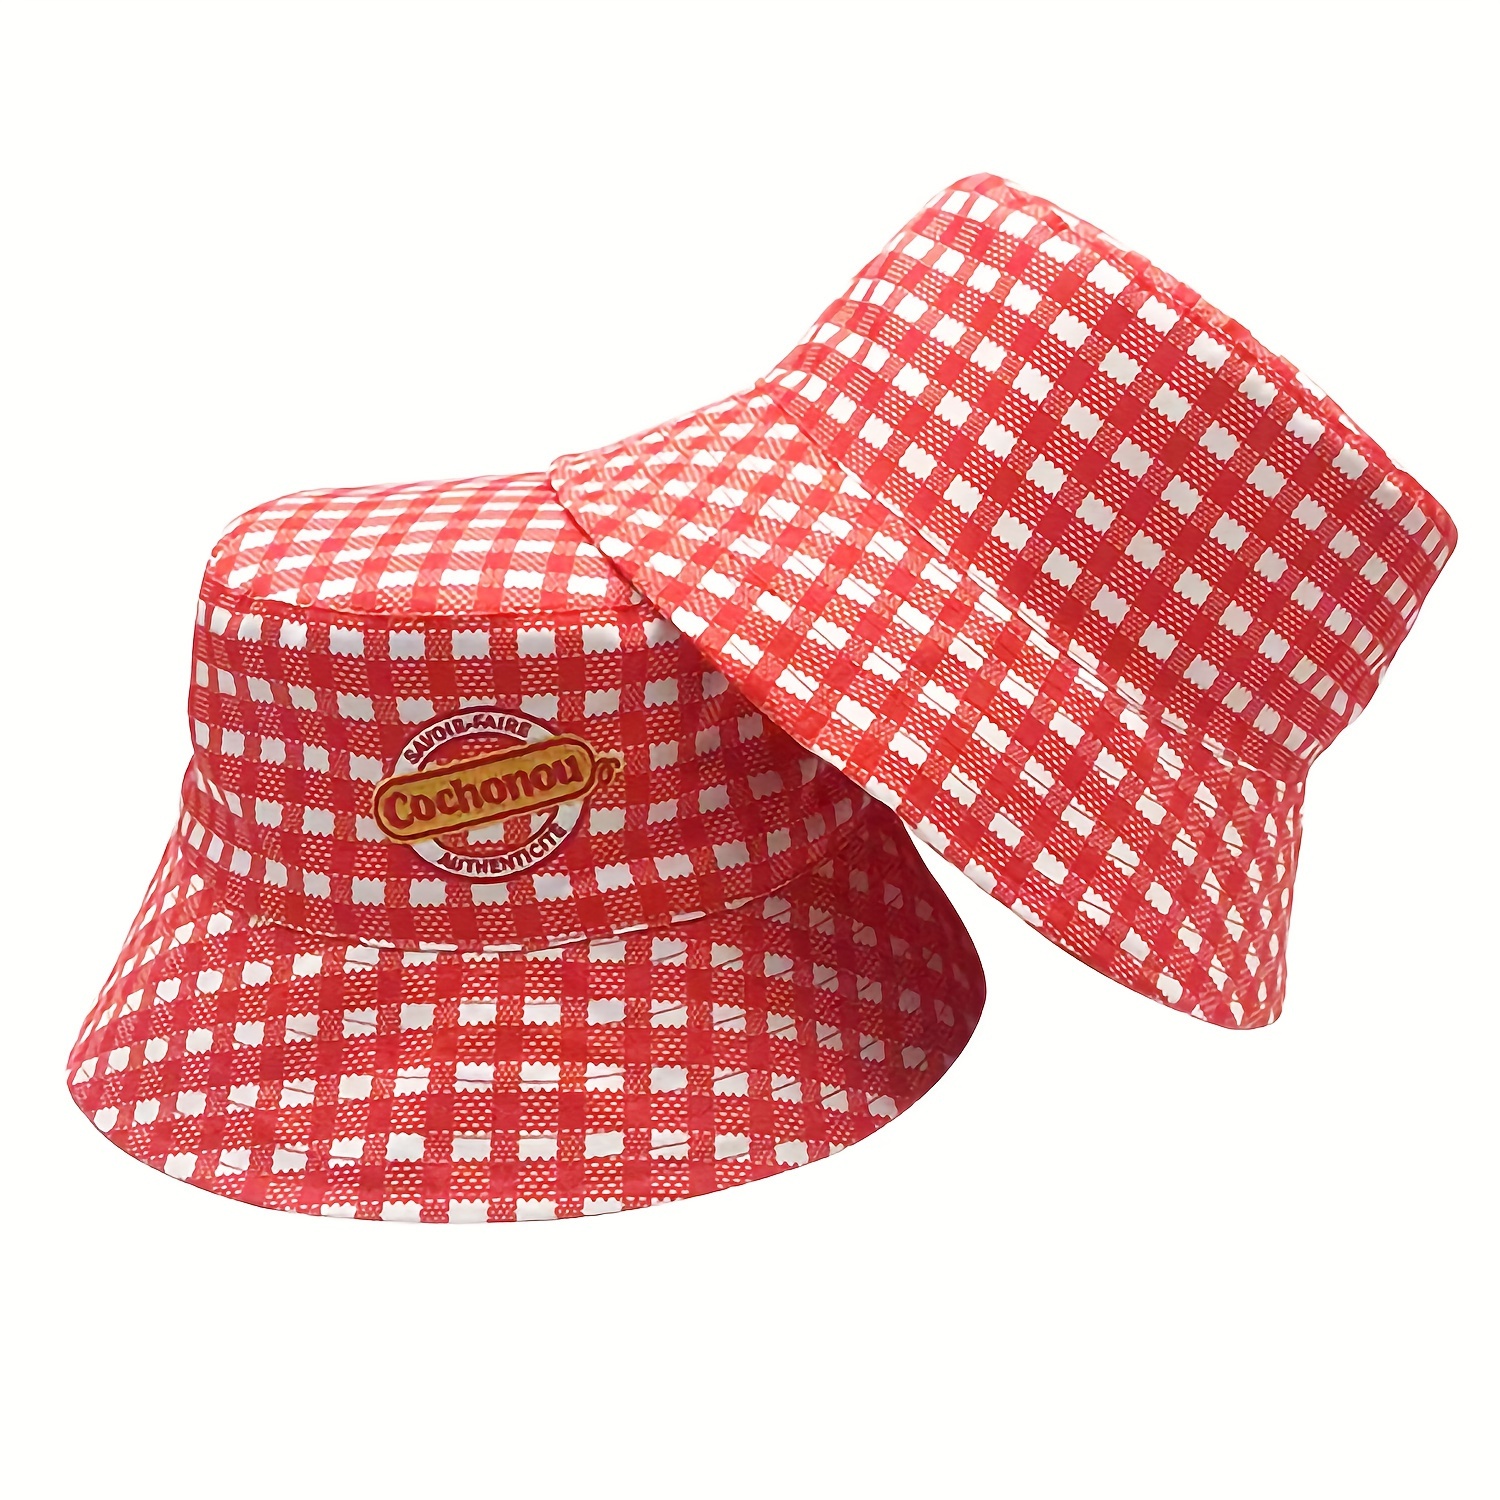 1pc Red Plaid Style France Bucket Hat Fashion Cochonou Bob Hat For